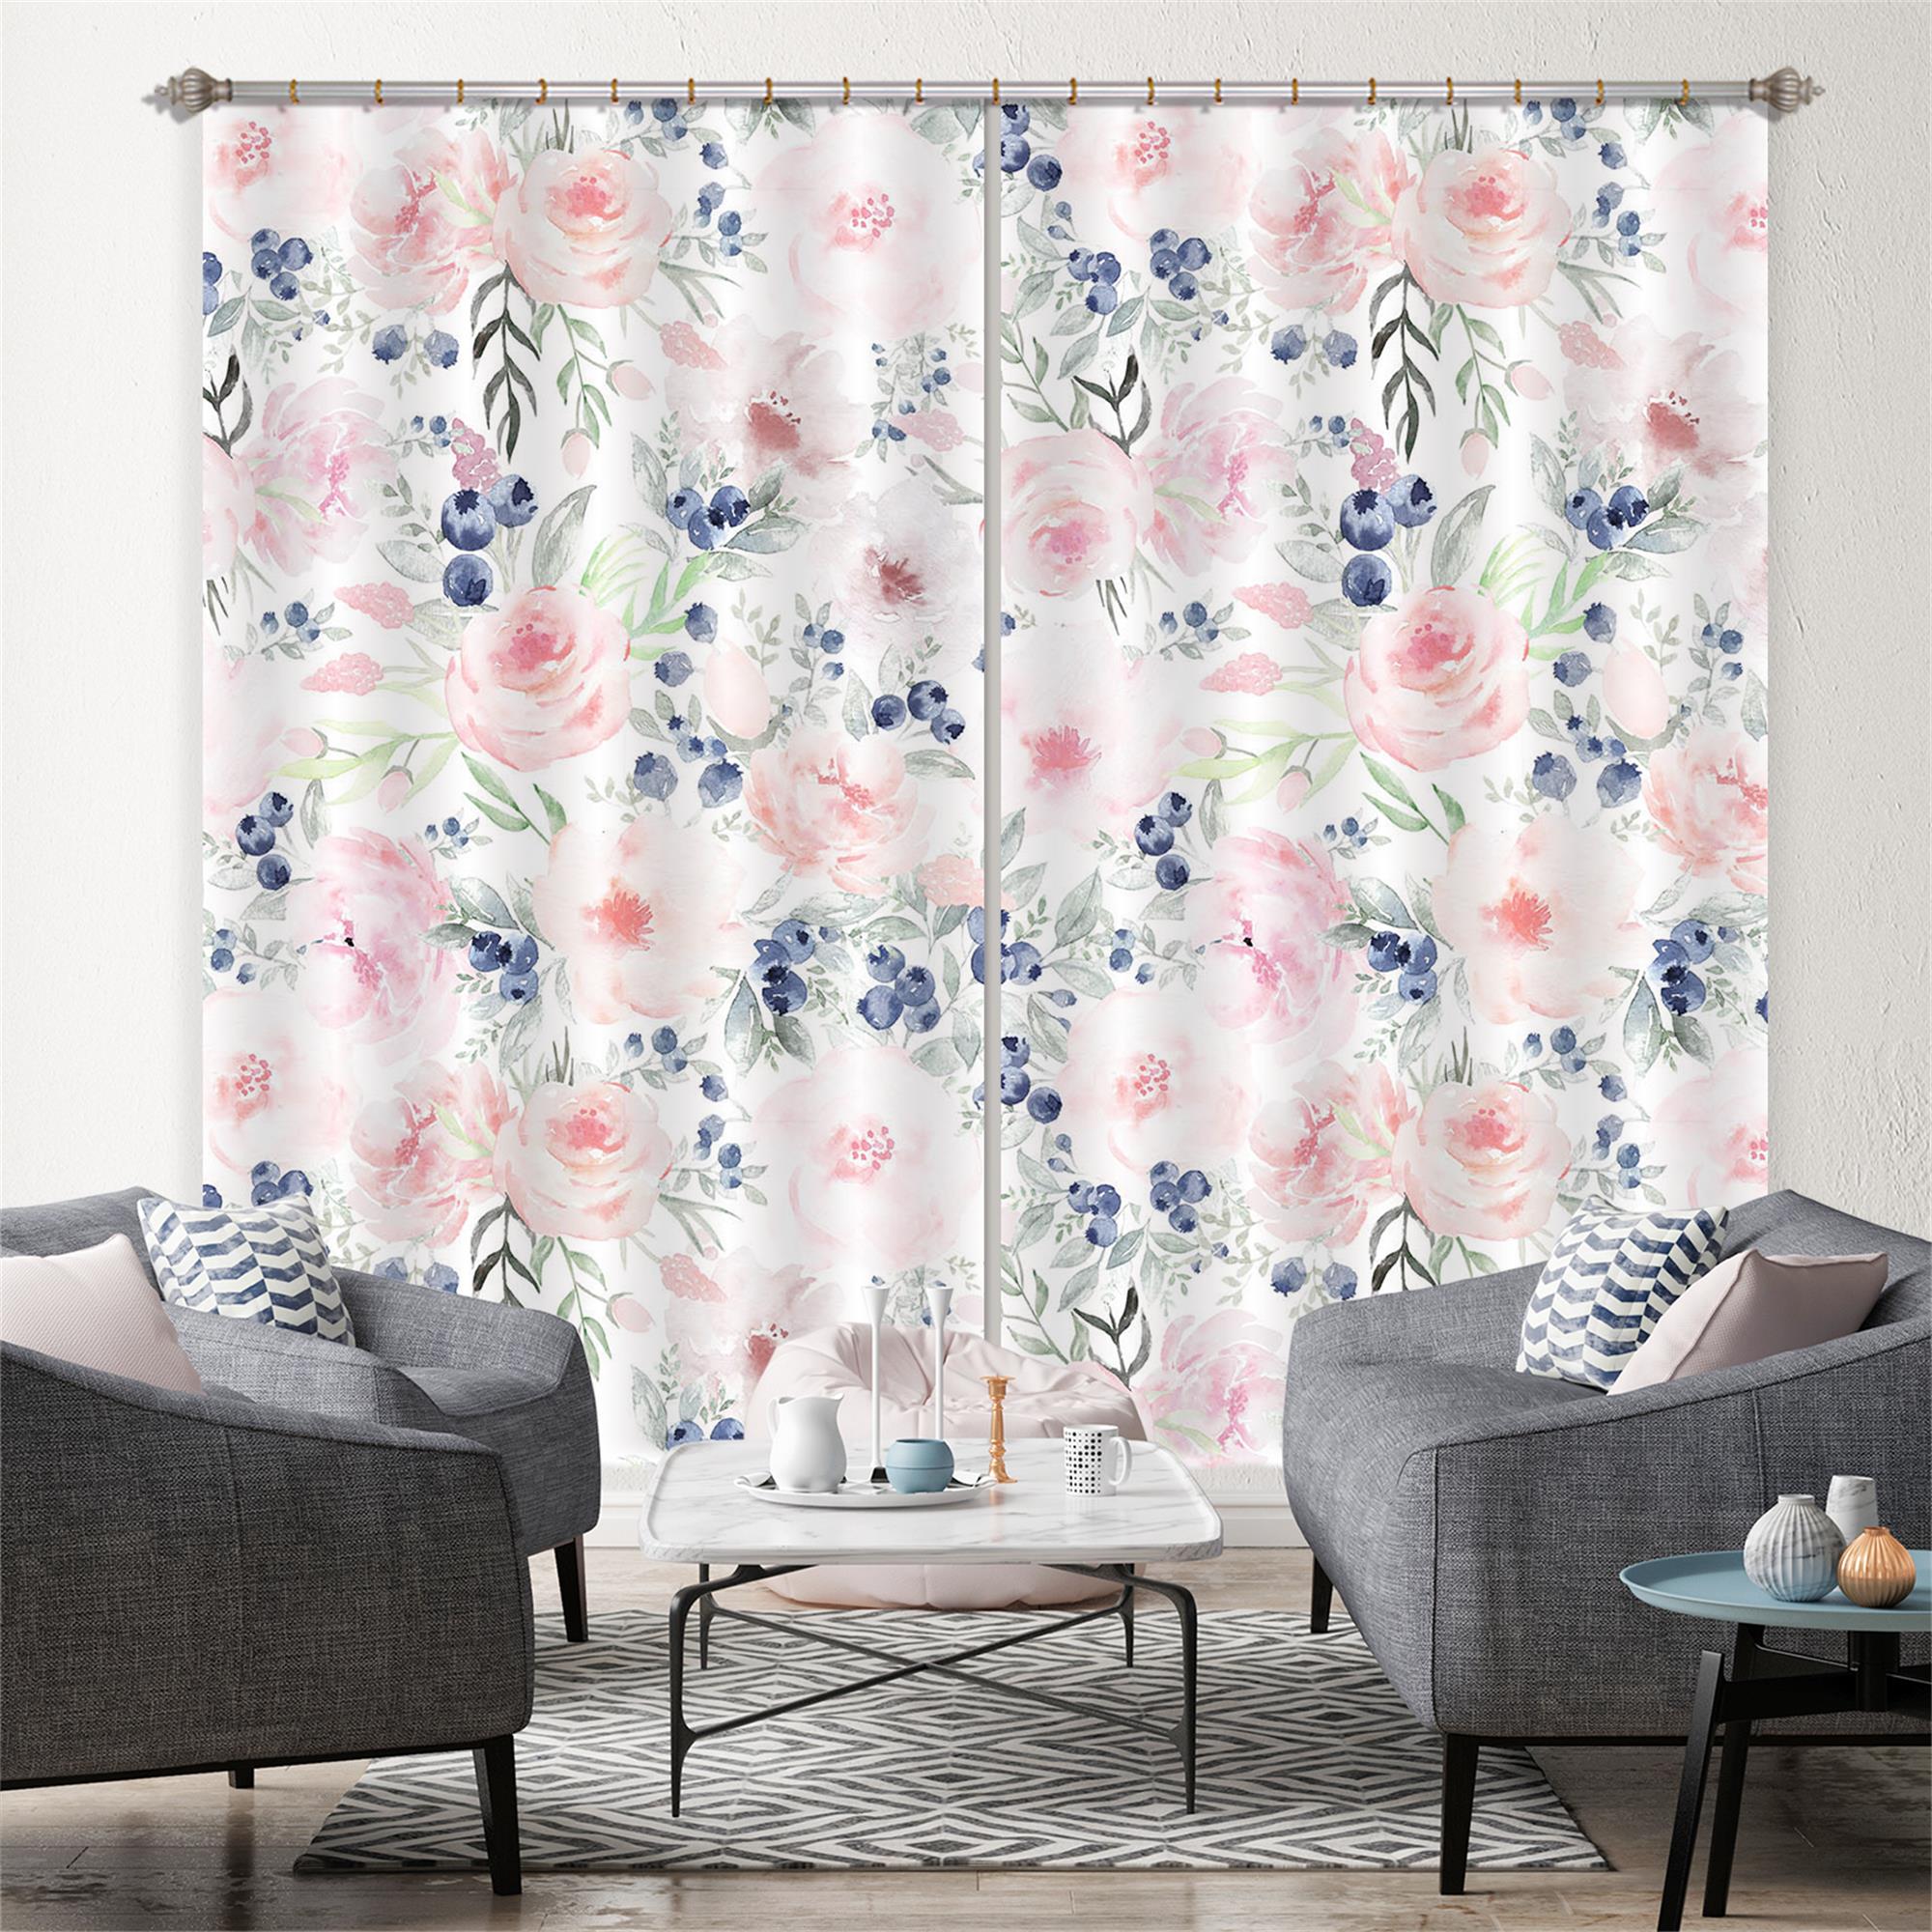 3D Blueberry Flower 239 Uta Naumann Curtain Curtains Drapes